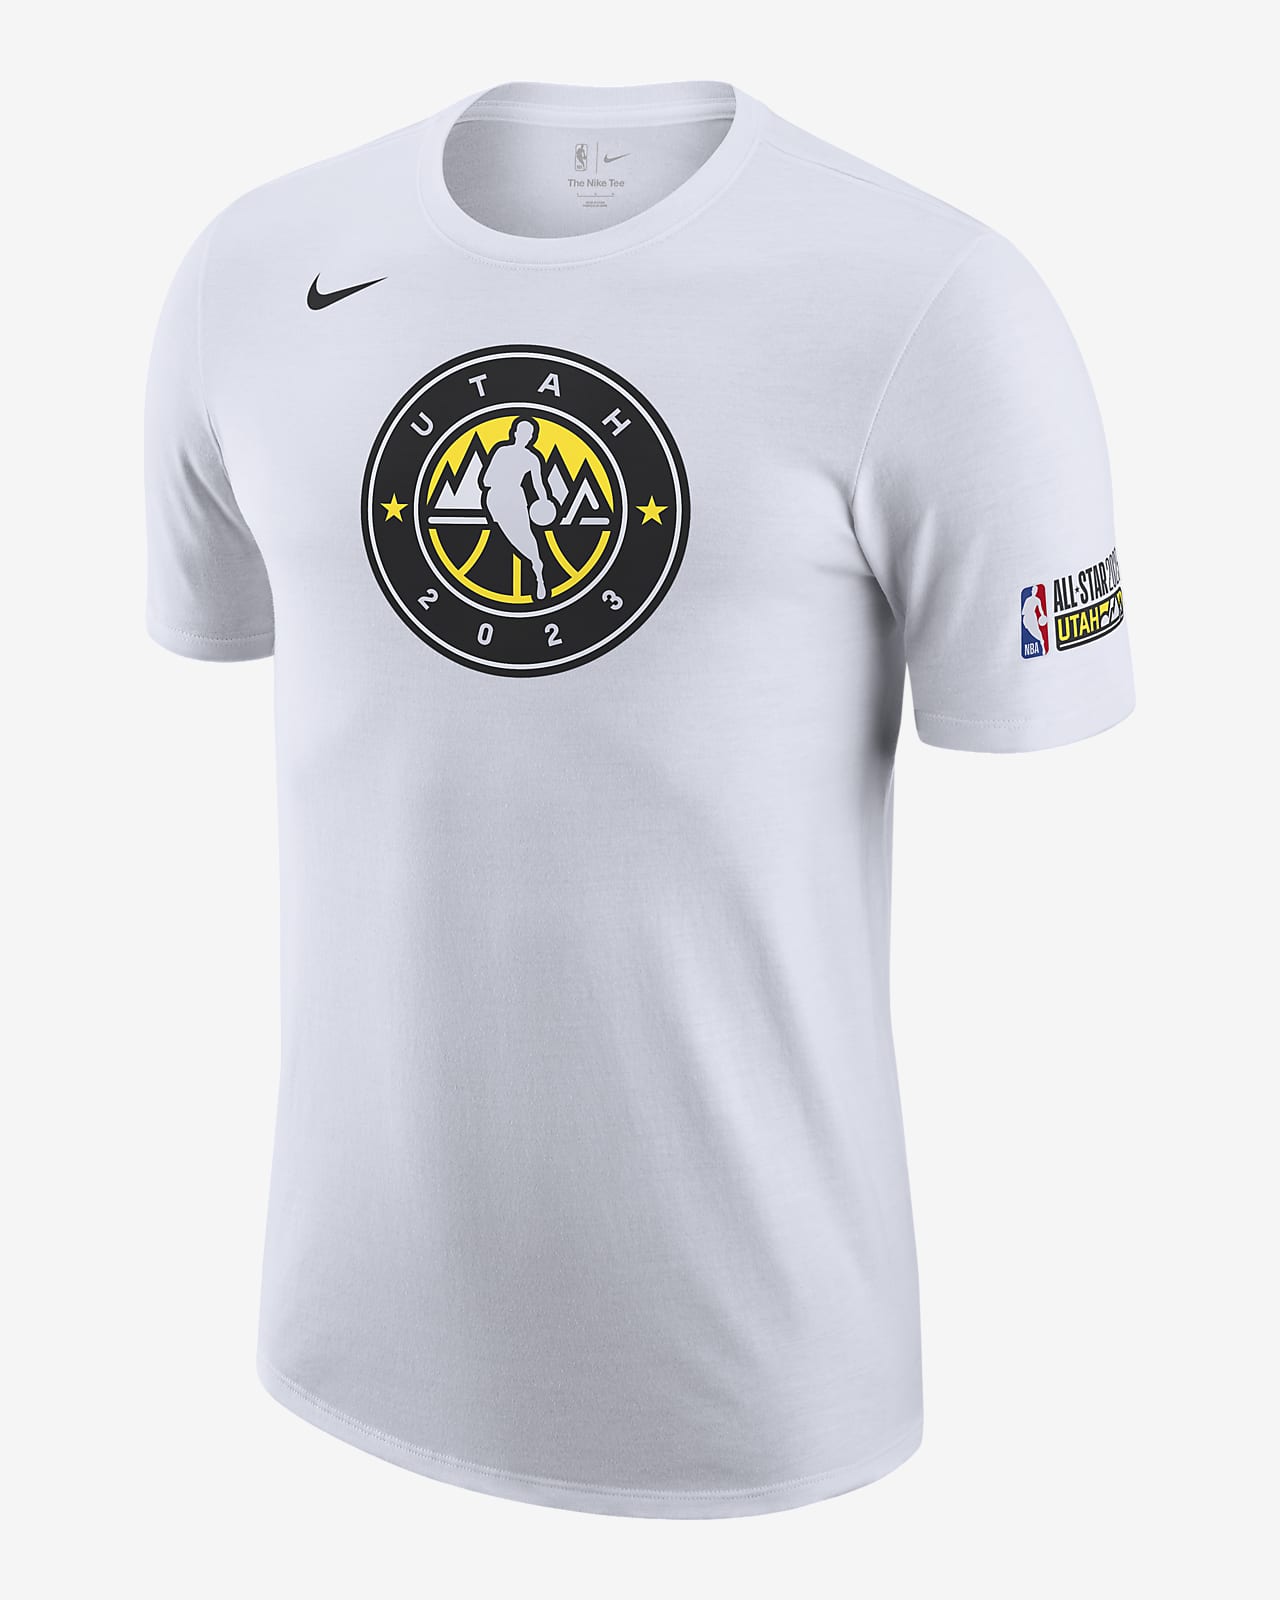 All-Star Essential Men's Nike NBA T-Shirt